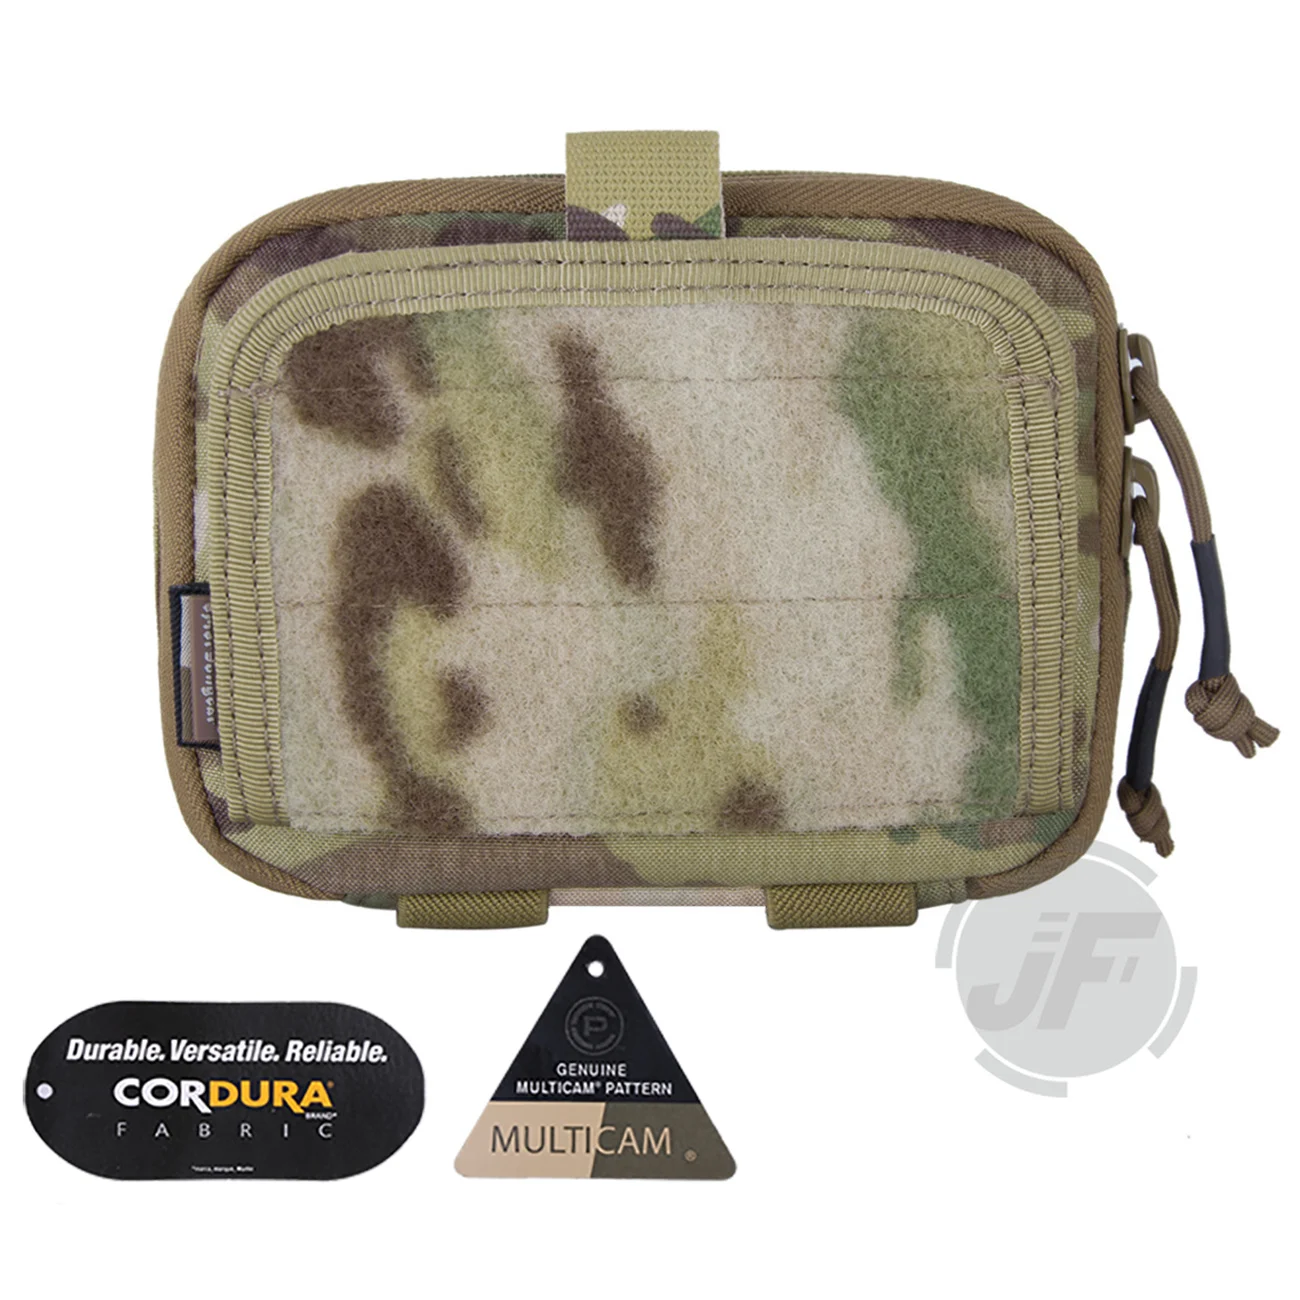 Emerson-Bolsa multiusos de combate táctico MOLLE, bolsa de administración EmersonGear militar, mapa de engranajes, bolsa multifunción para caza, Multicam